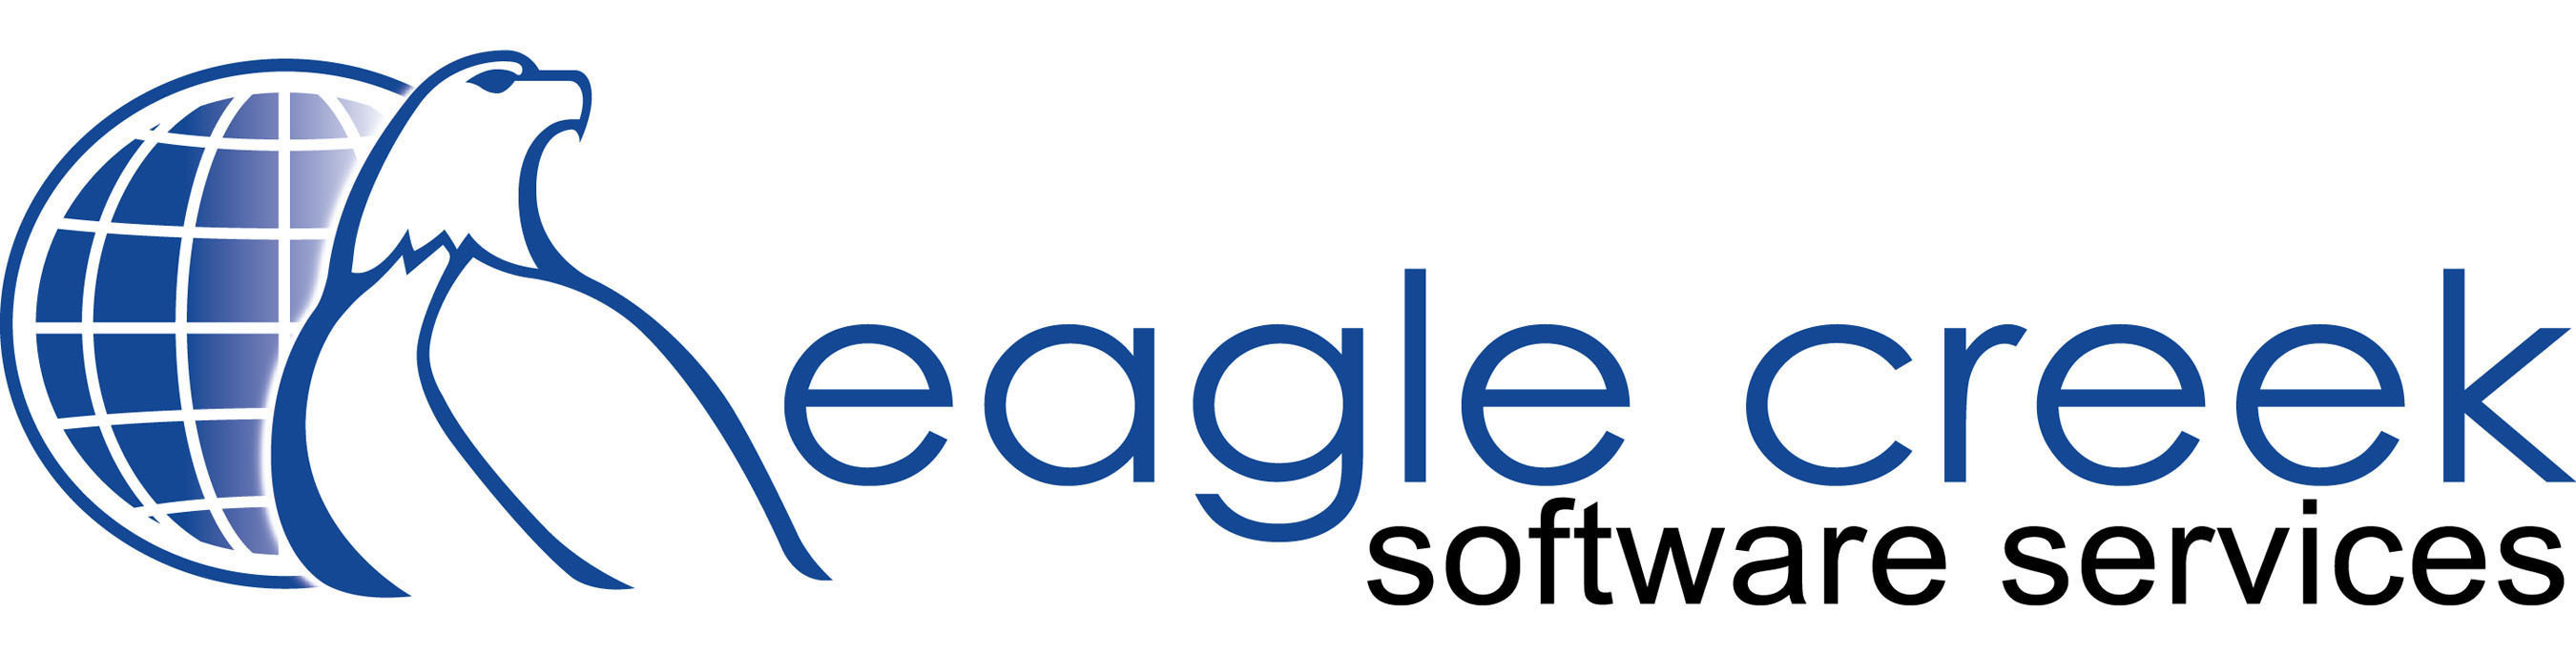 Eagle Creek Software Services logo. (PRNewsFoto/Eagle Creek Software Services) (PRNewsFoto/)